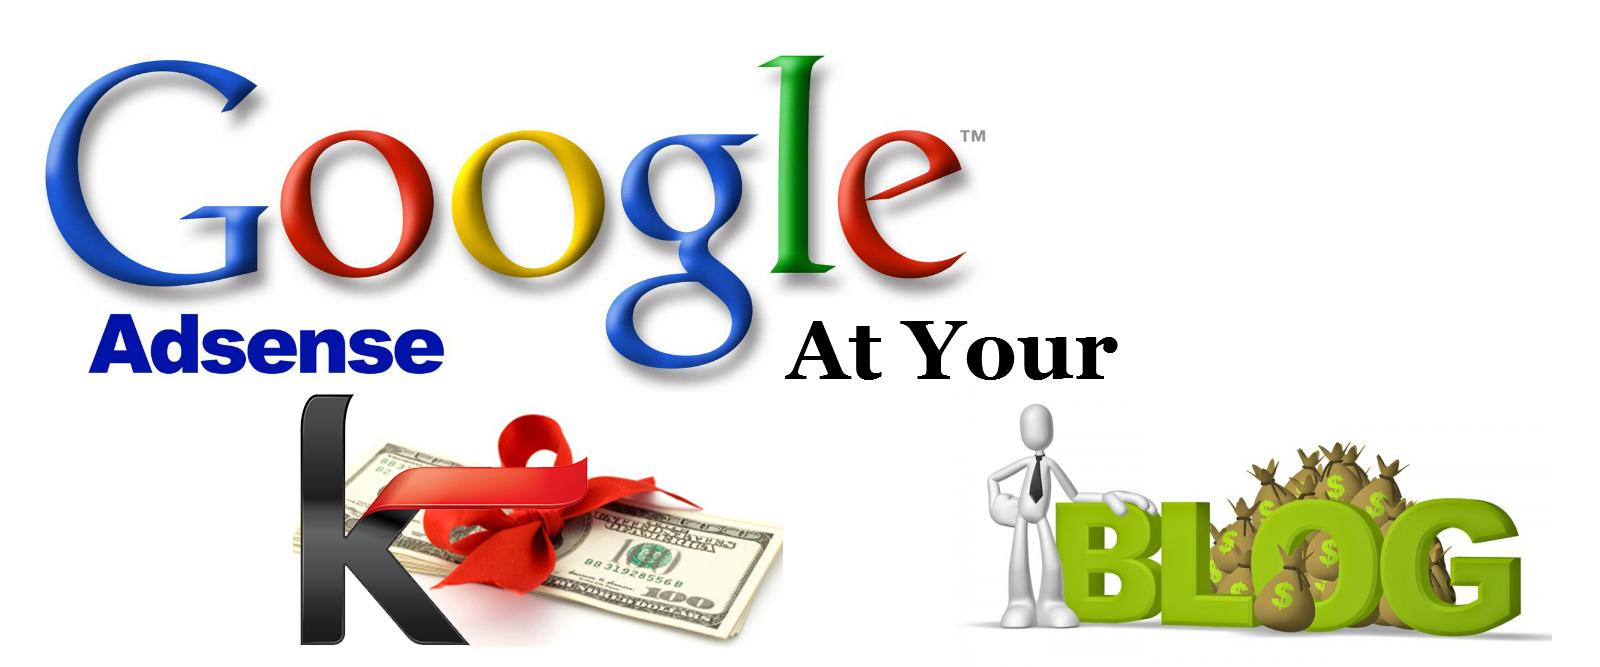 Google adsense earning boost